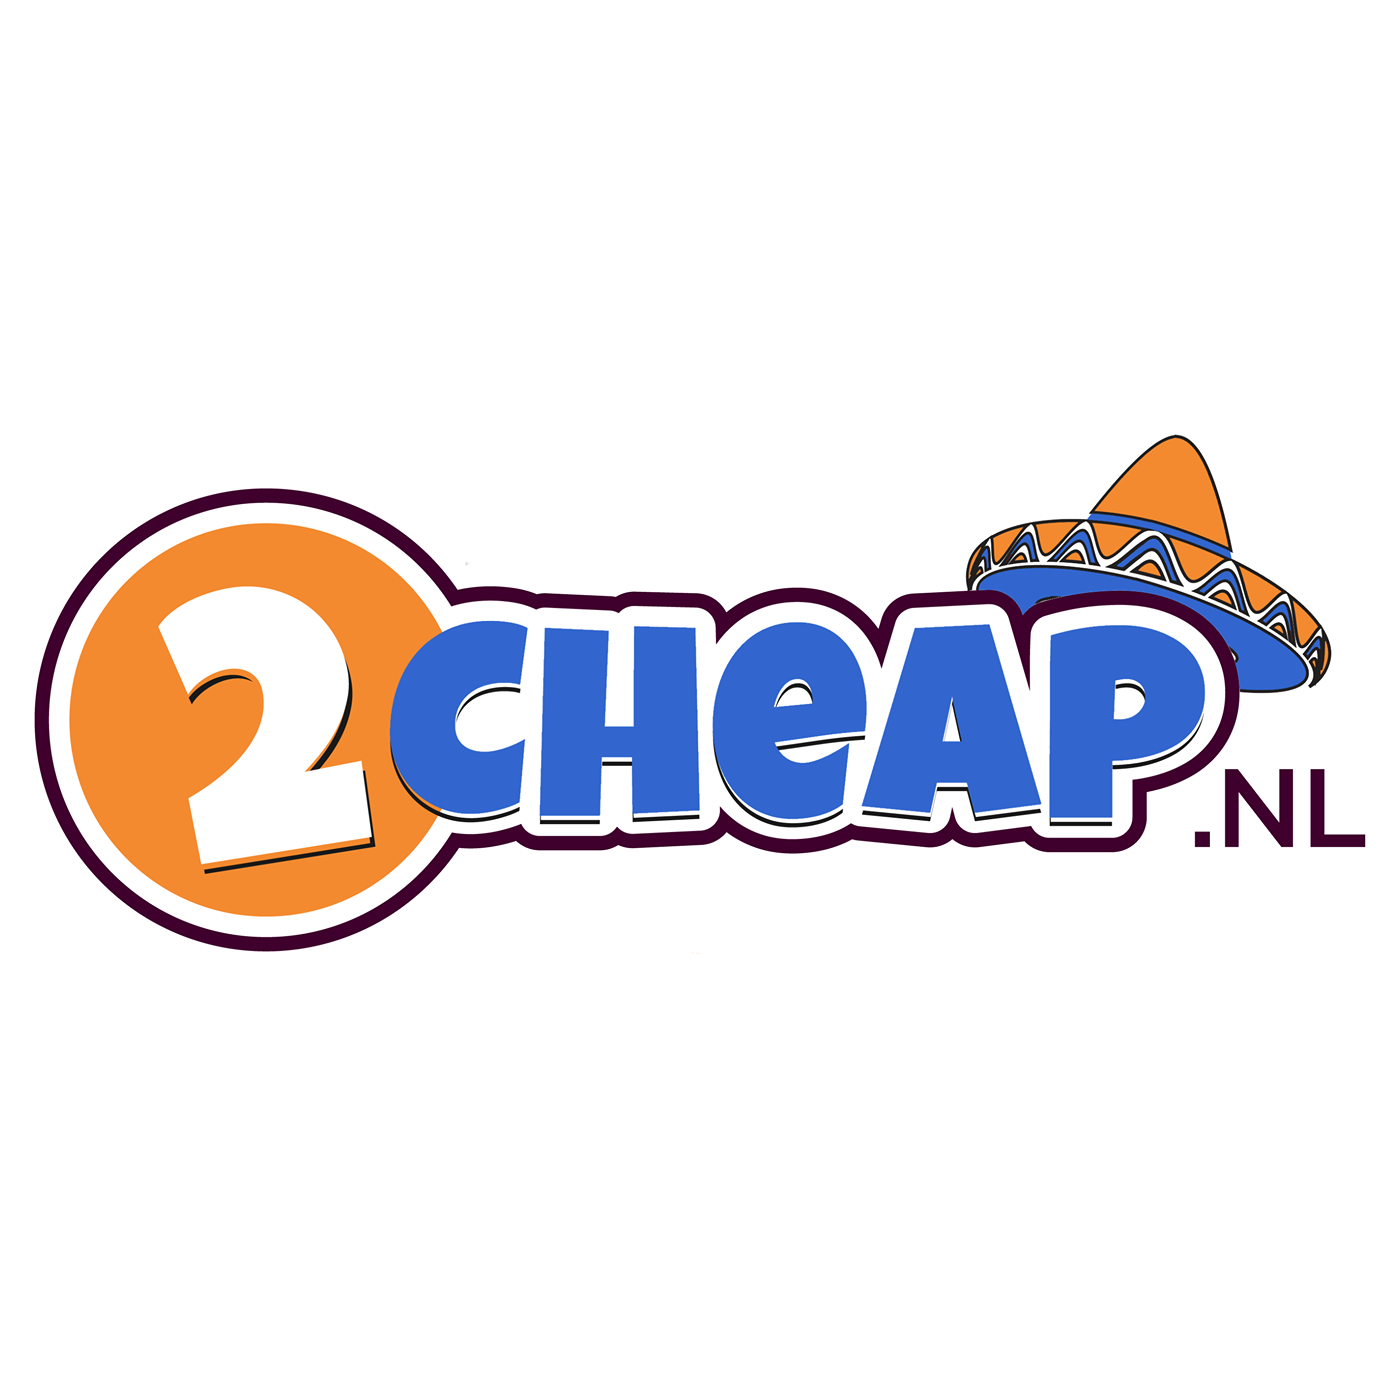 2cheap.nl reviews, beoordelingen en ervaringen